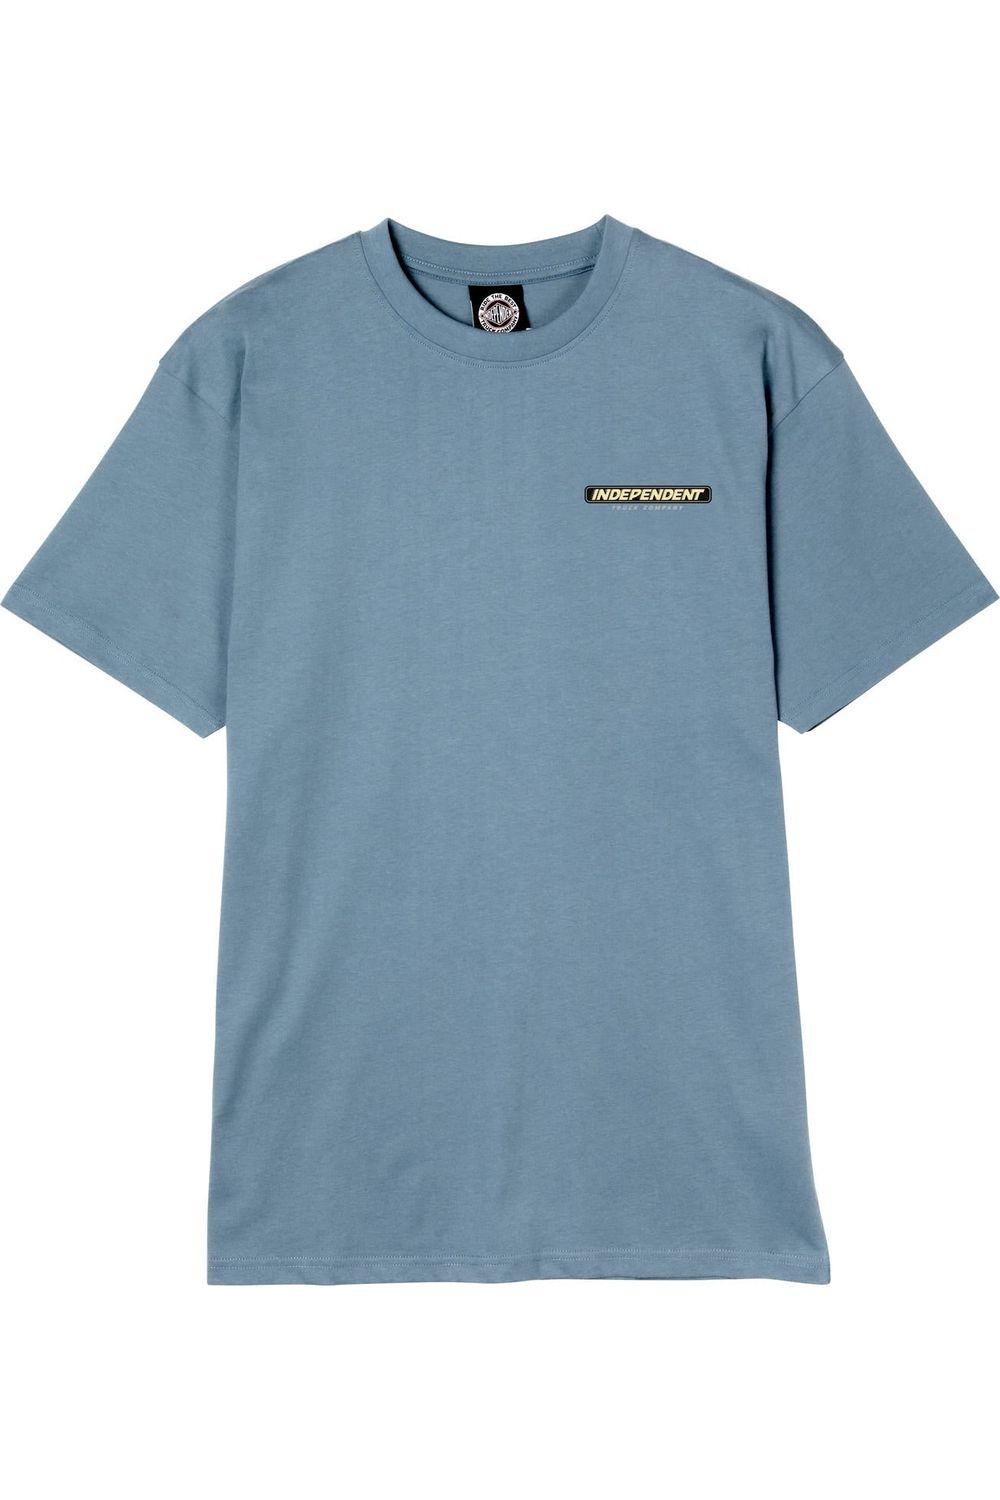 Independent Speed Snake T-Shirt Slate Blue